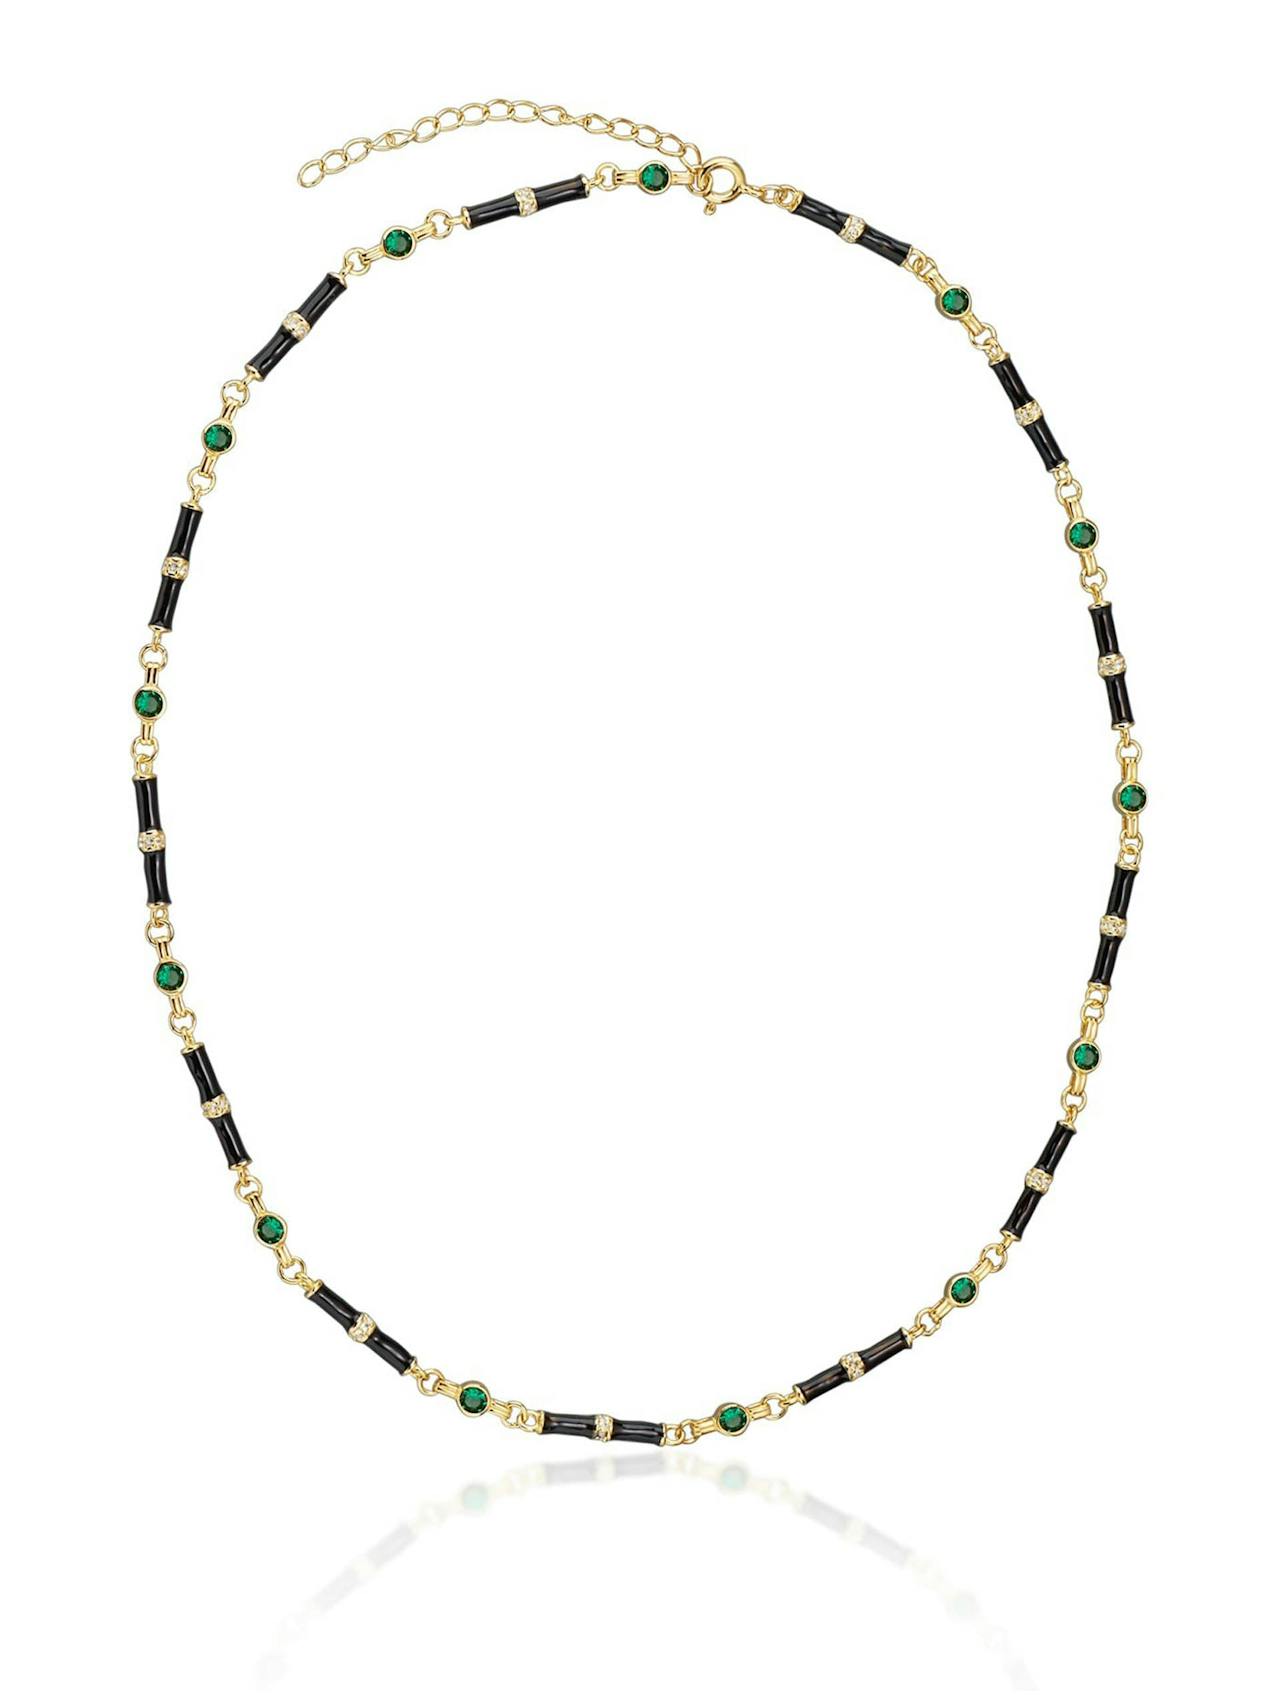 Black enamel Marlowe necklace with emerald green stone